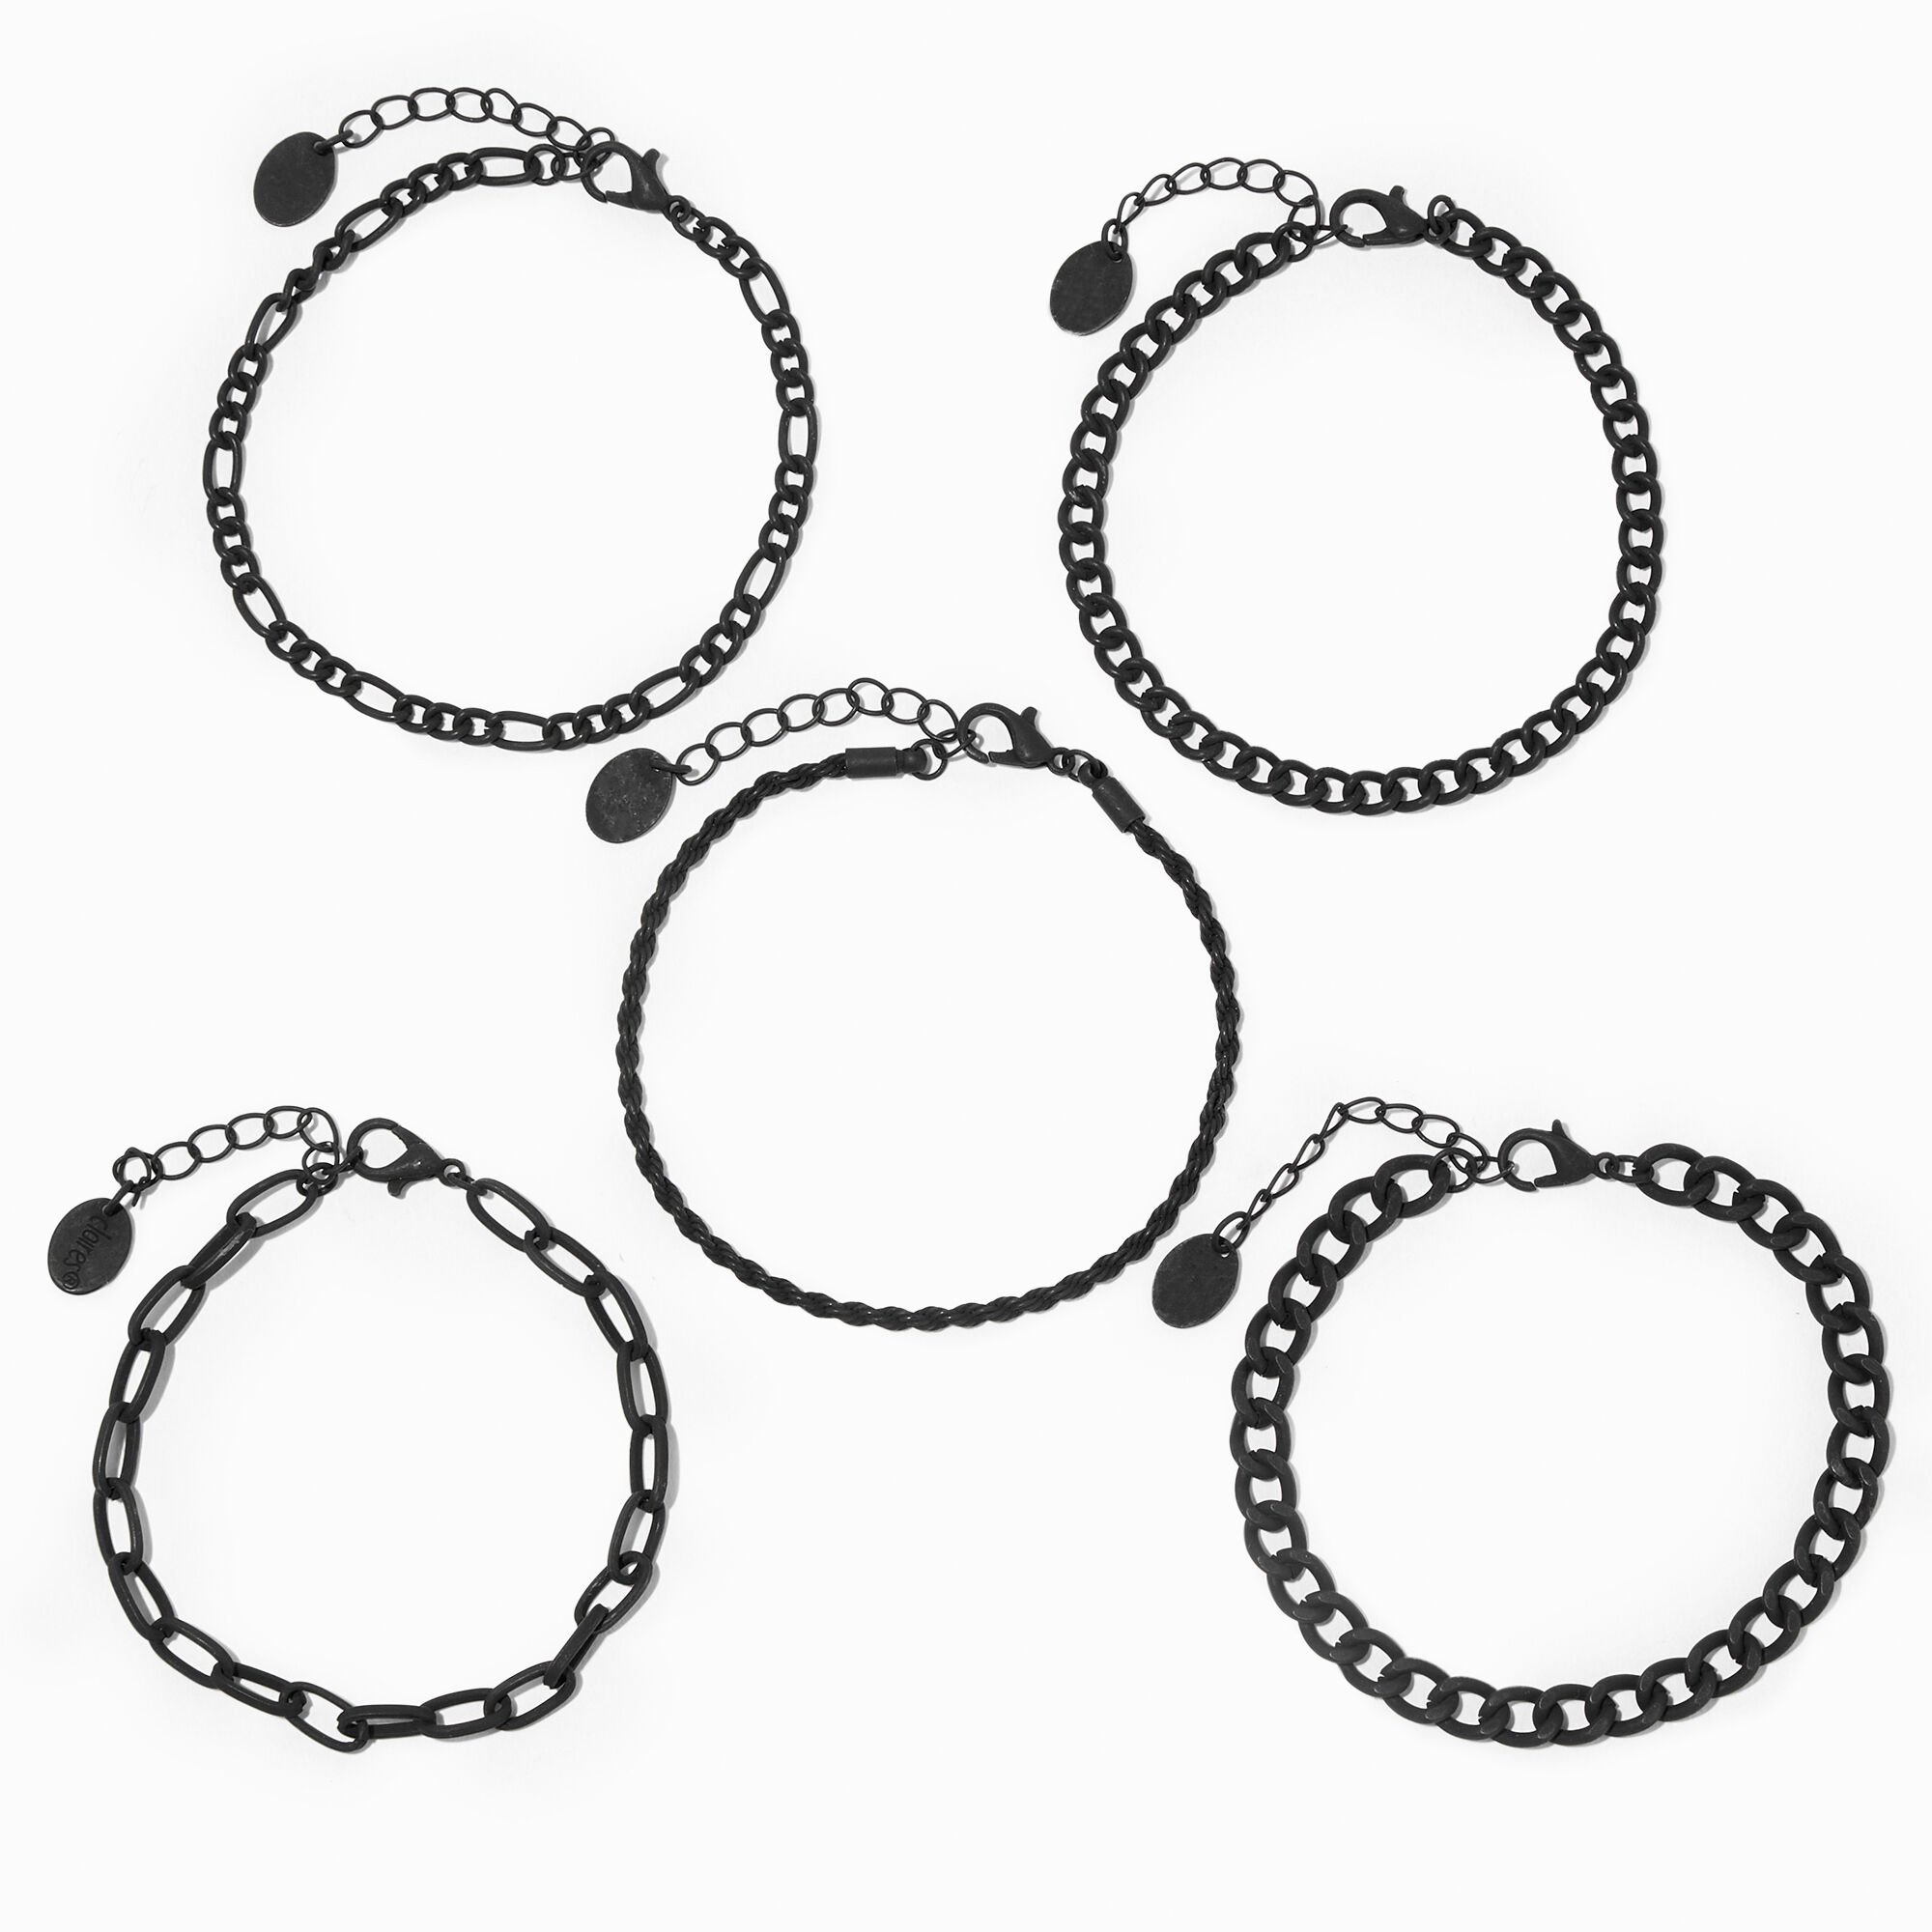 View Claires Woven Chain Bracelet Set 5 Pack Black information